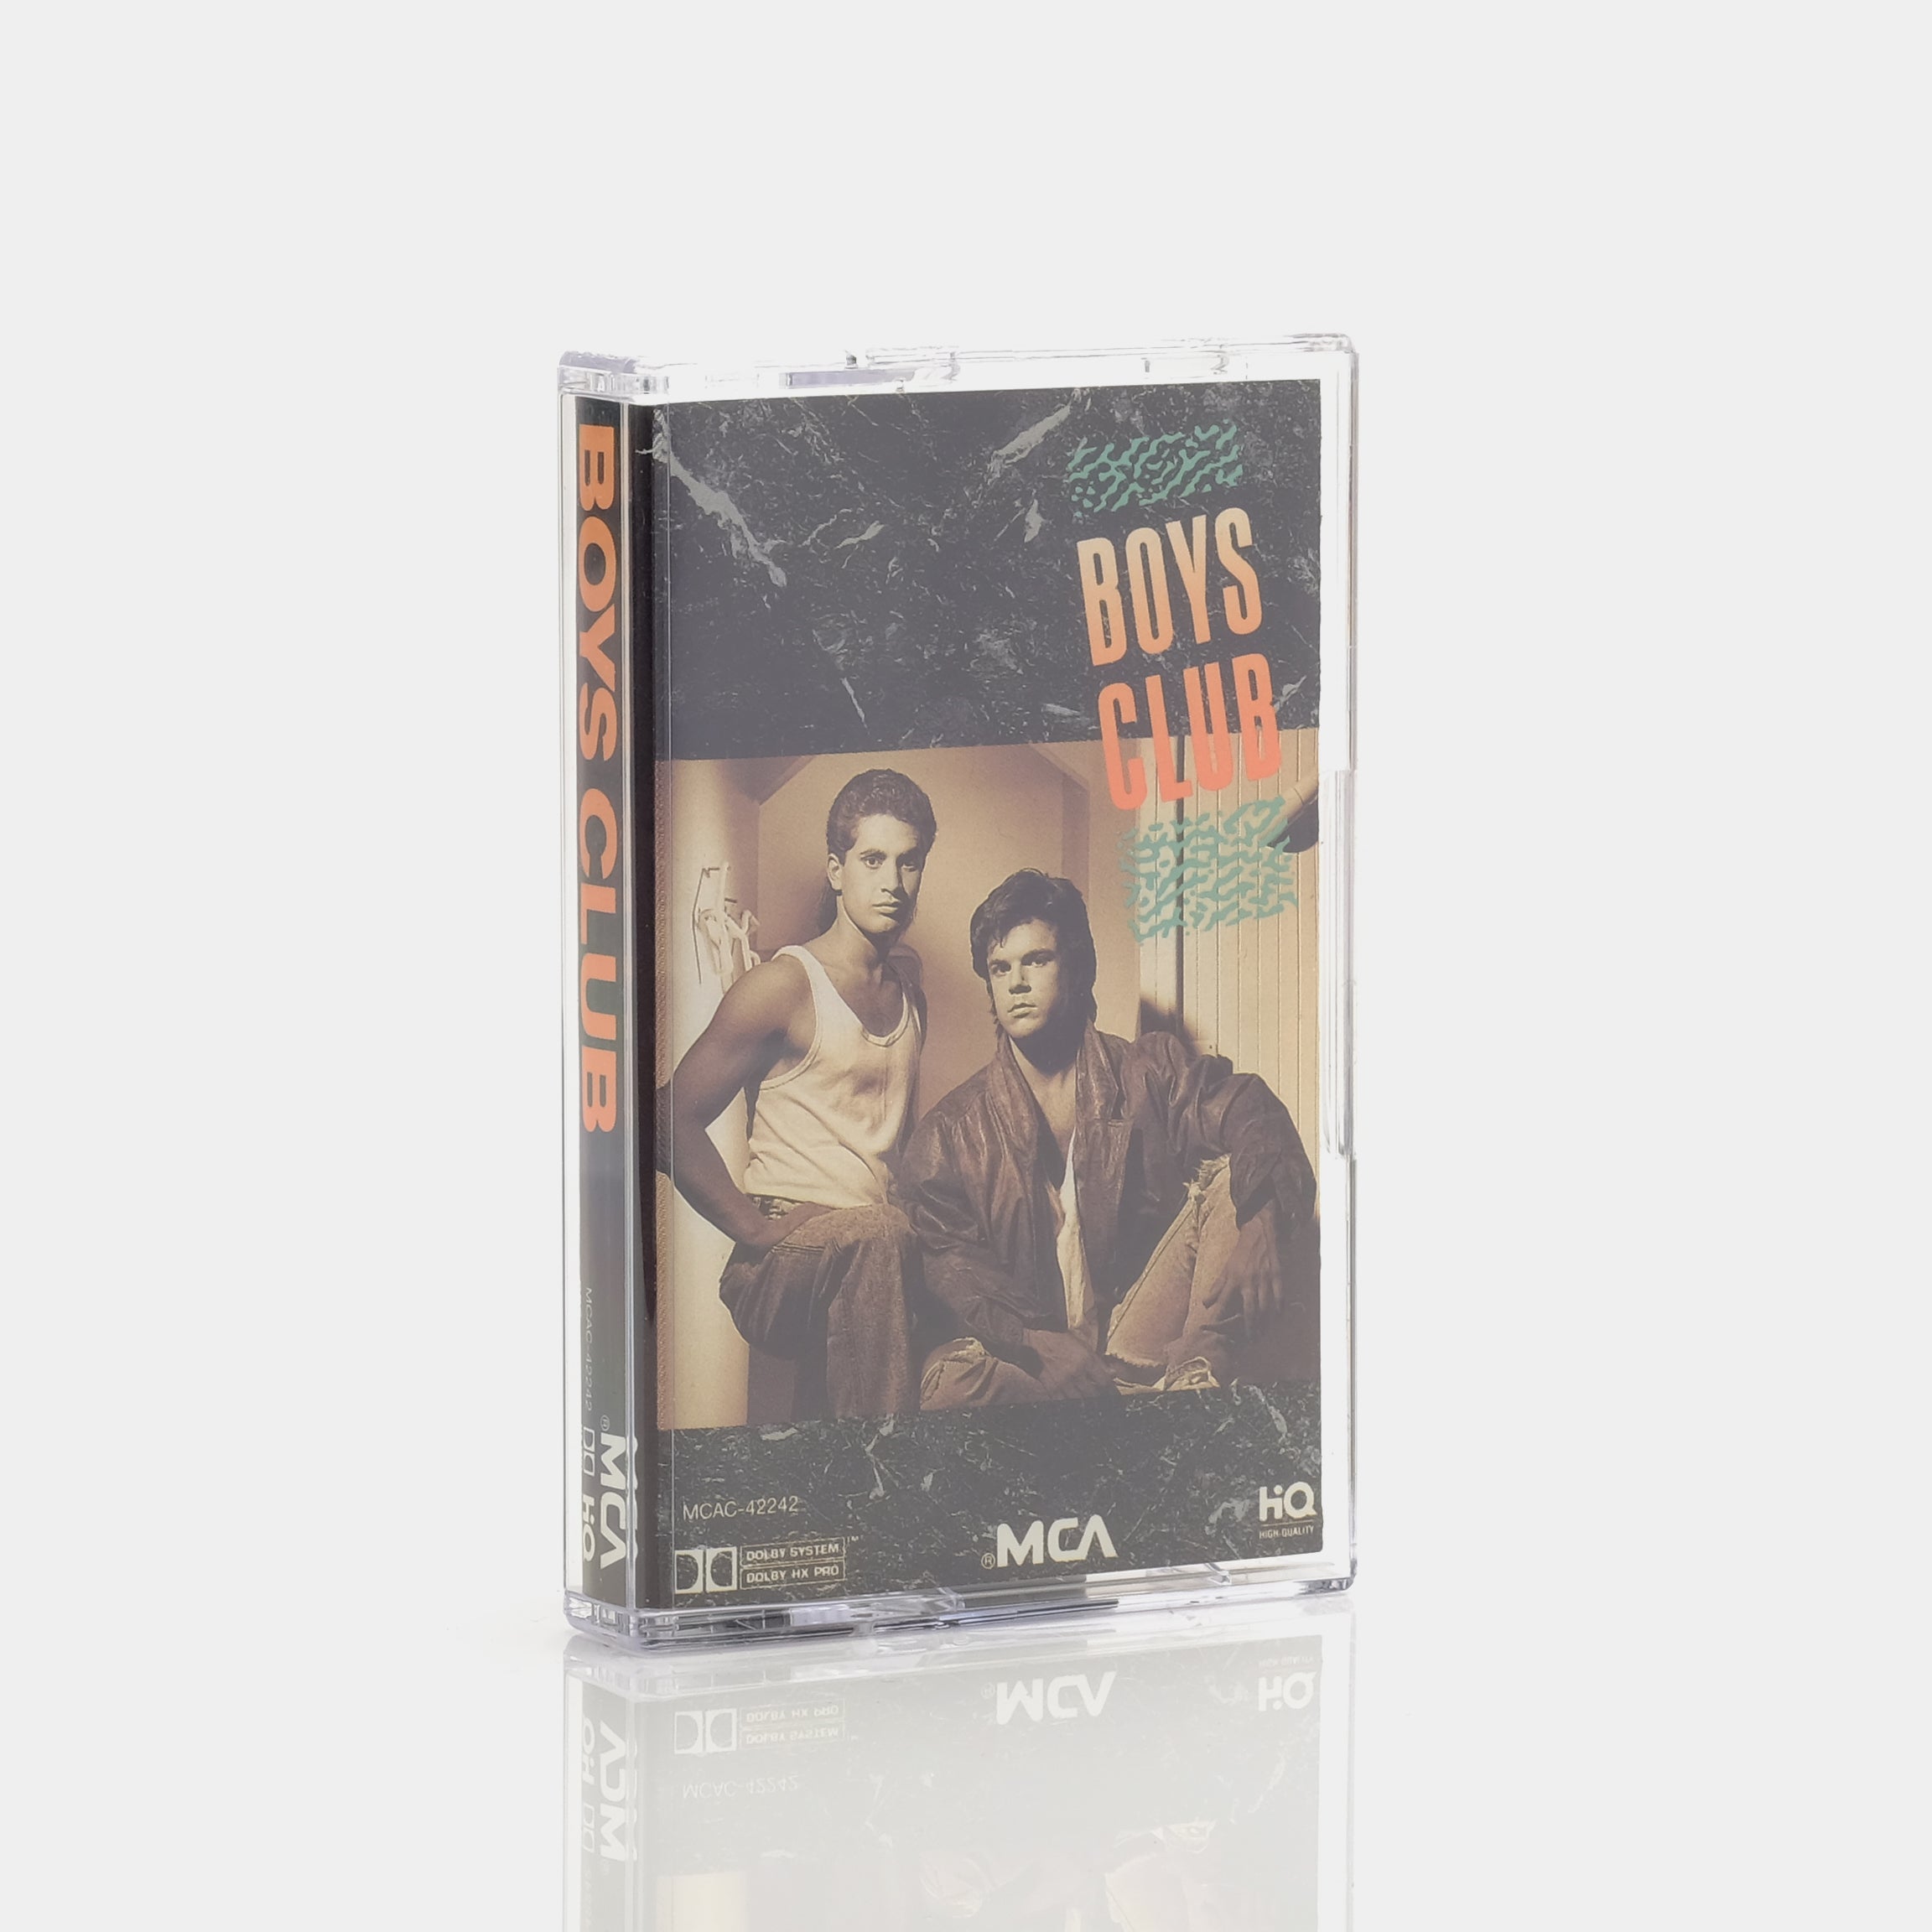 Boys Club - Boys Club Cassette Tape